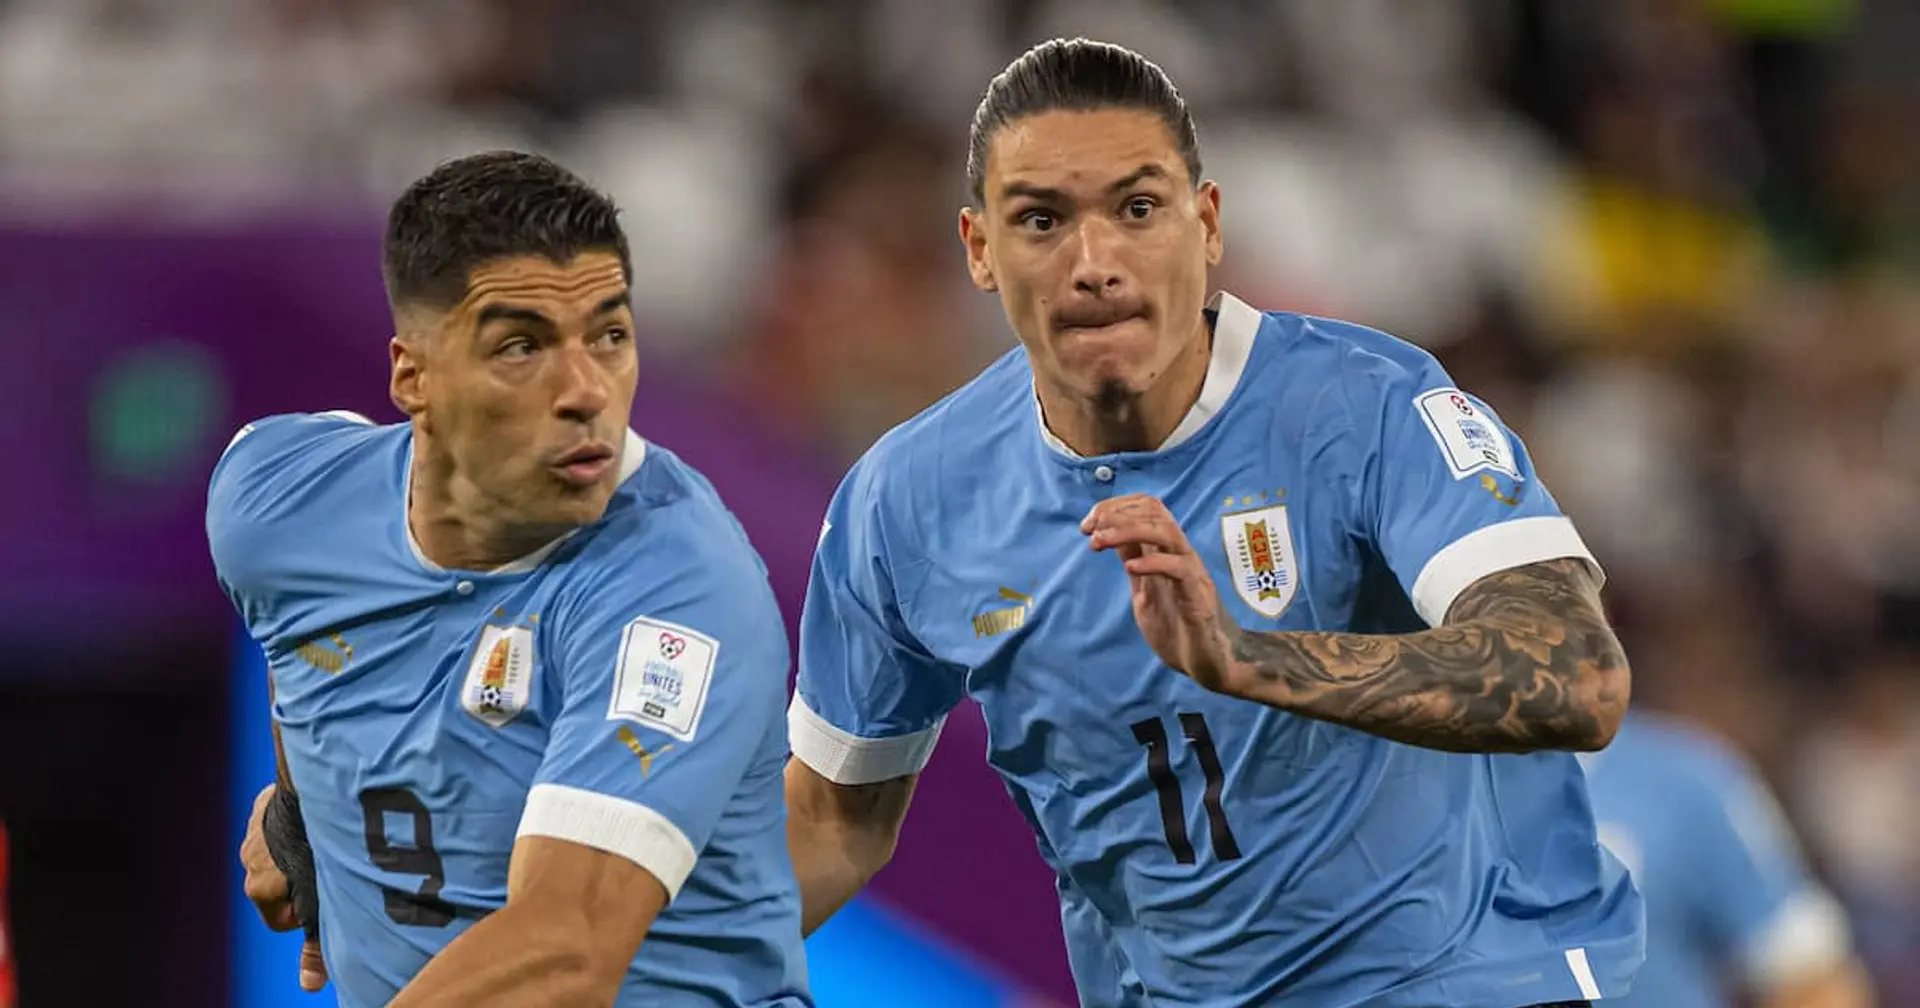 'No words to describe': Darwin Nunez reacts to his World Cup debut